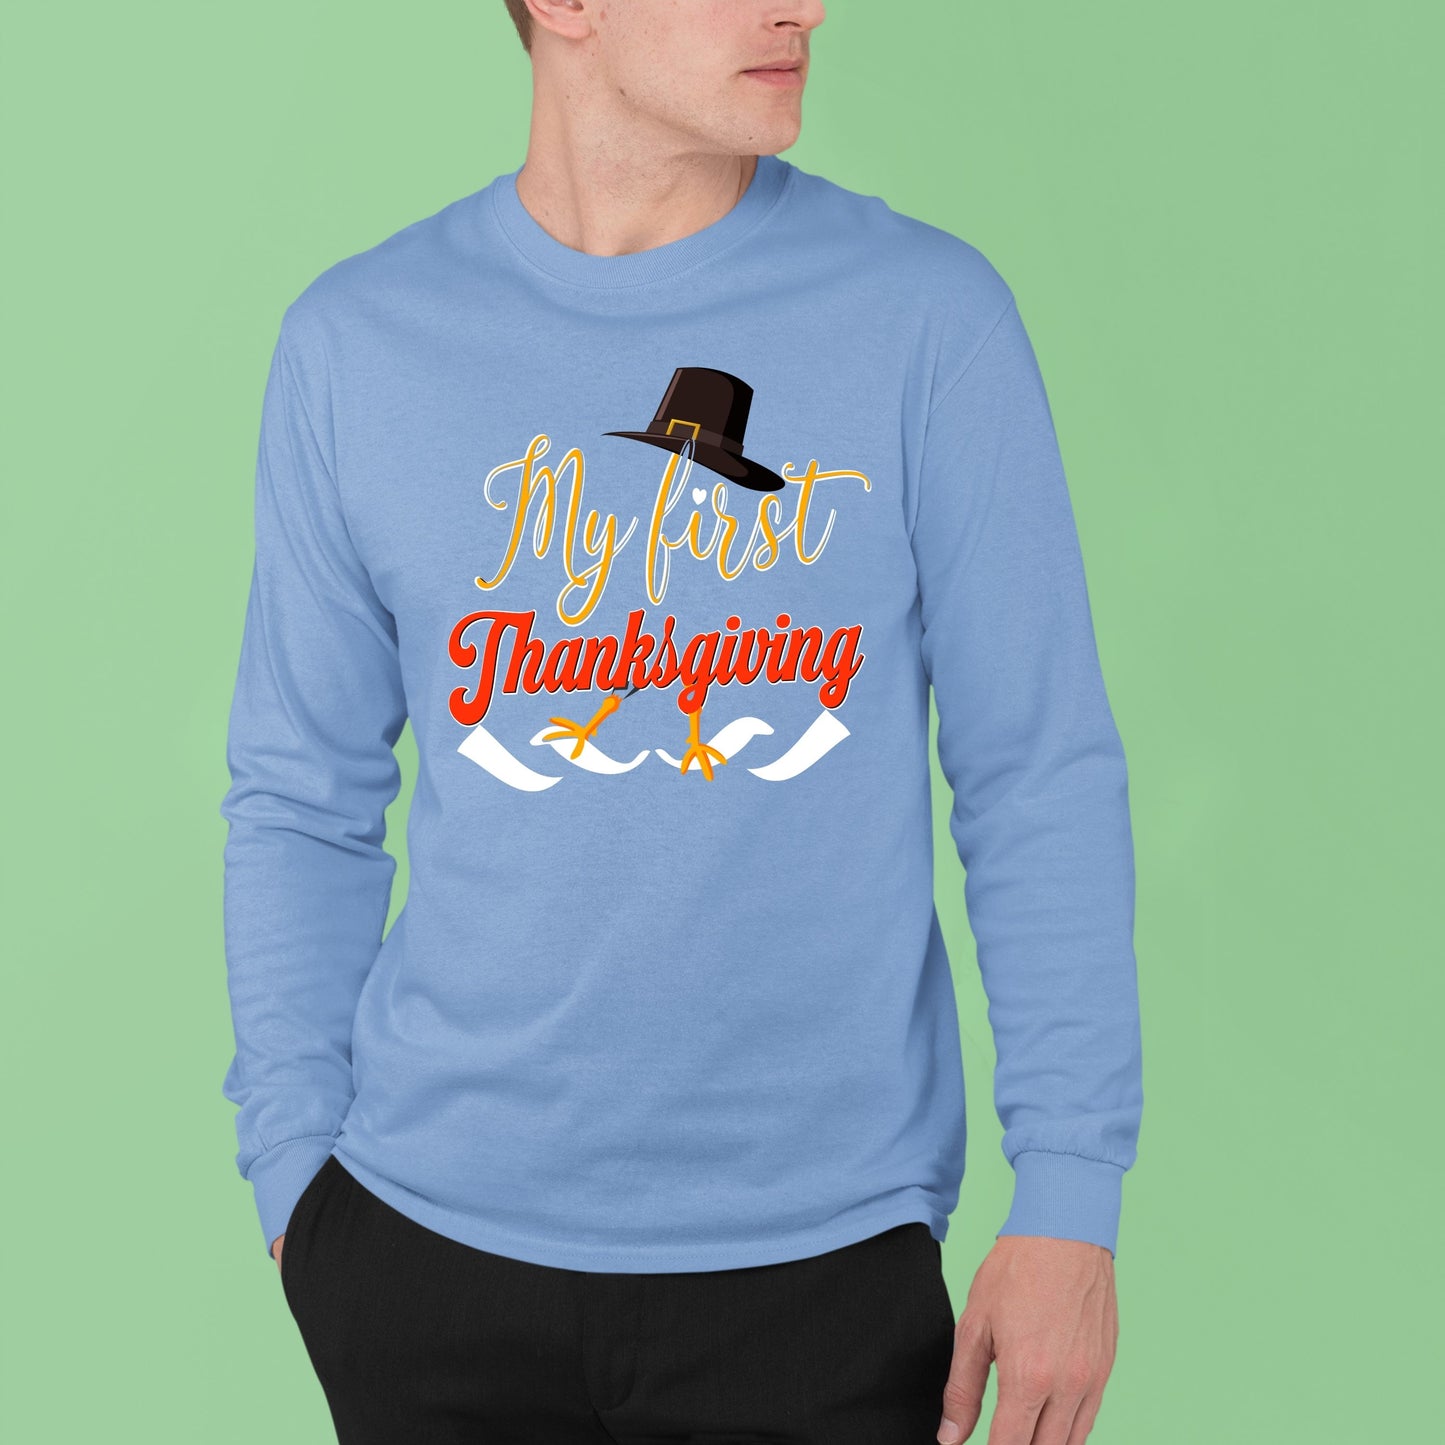 My First Thanks Giving, Thanksgiving Sweatshirt, Thanksgiving Sweater for Men, Thanksgiving Gift Ideas, Cute Thanksgiving